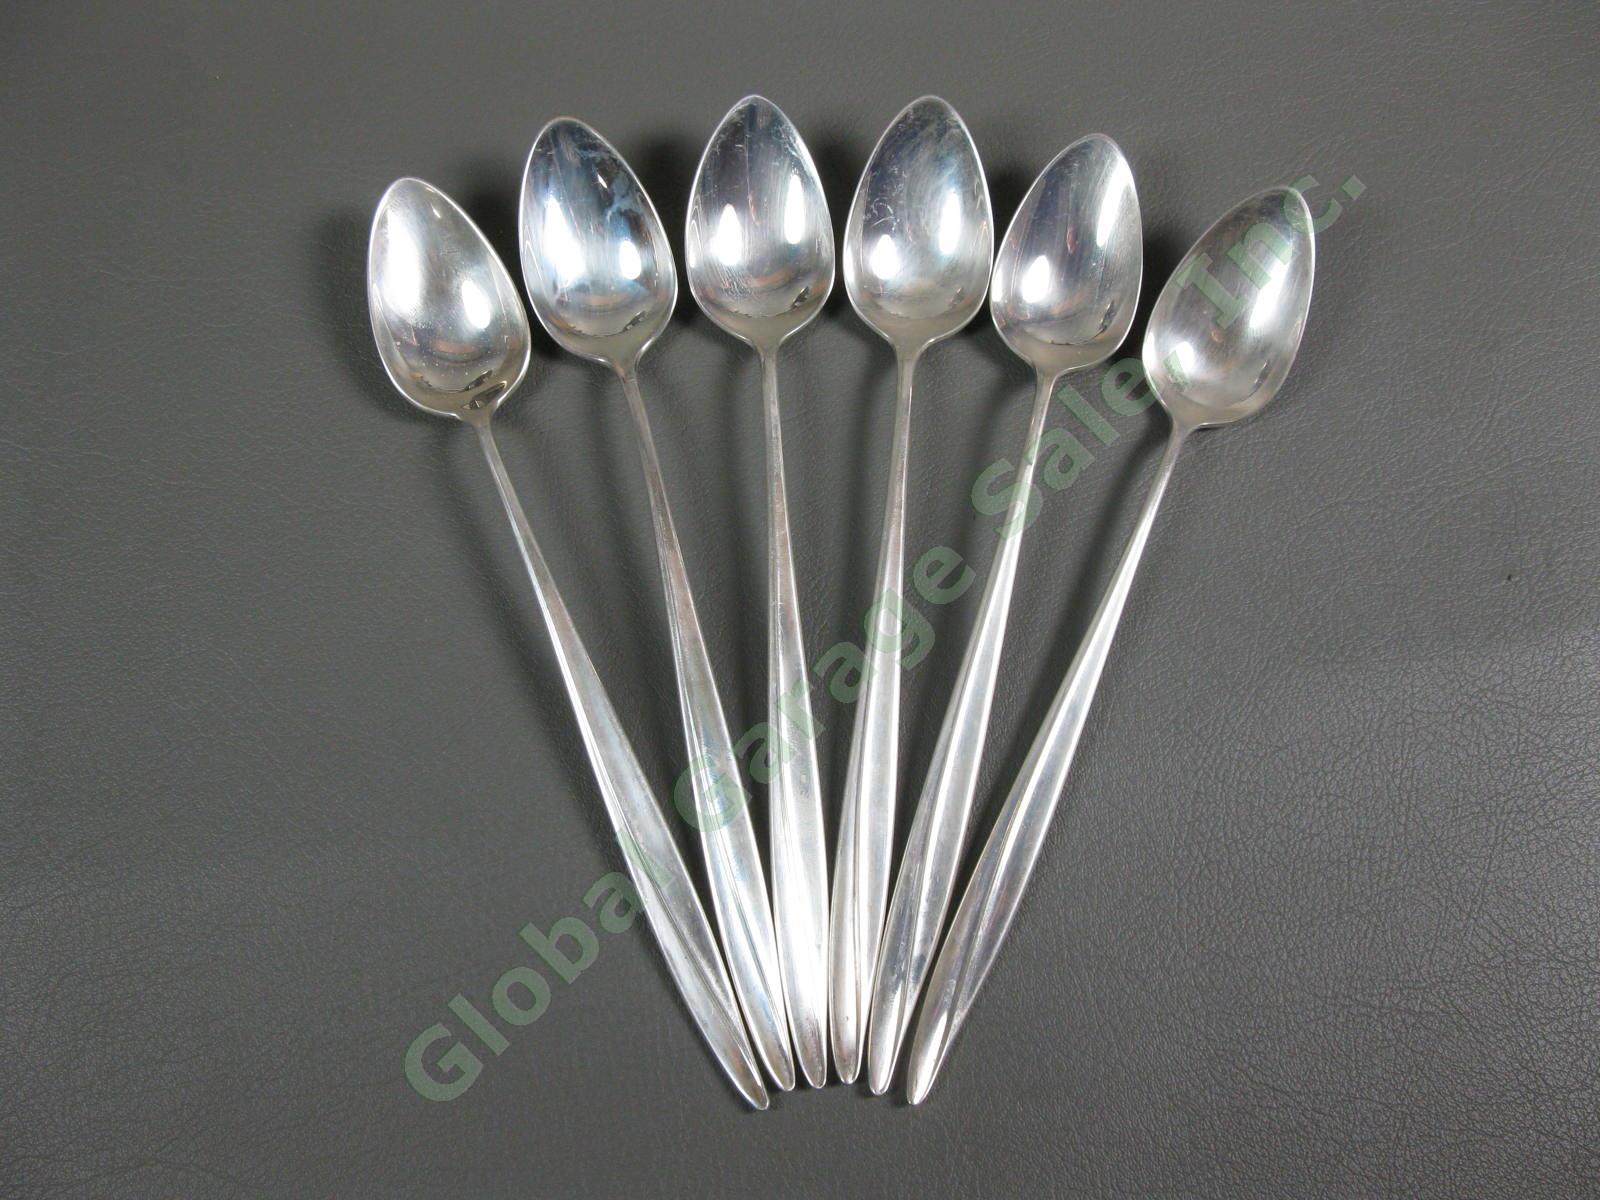 6 Gorham Firelight Sterling Silver 7 5/8" Iced Tea Spoon Set 194g Grams 7oz 925